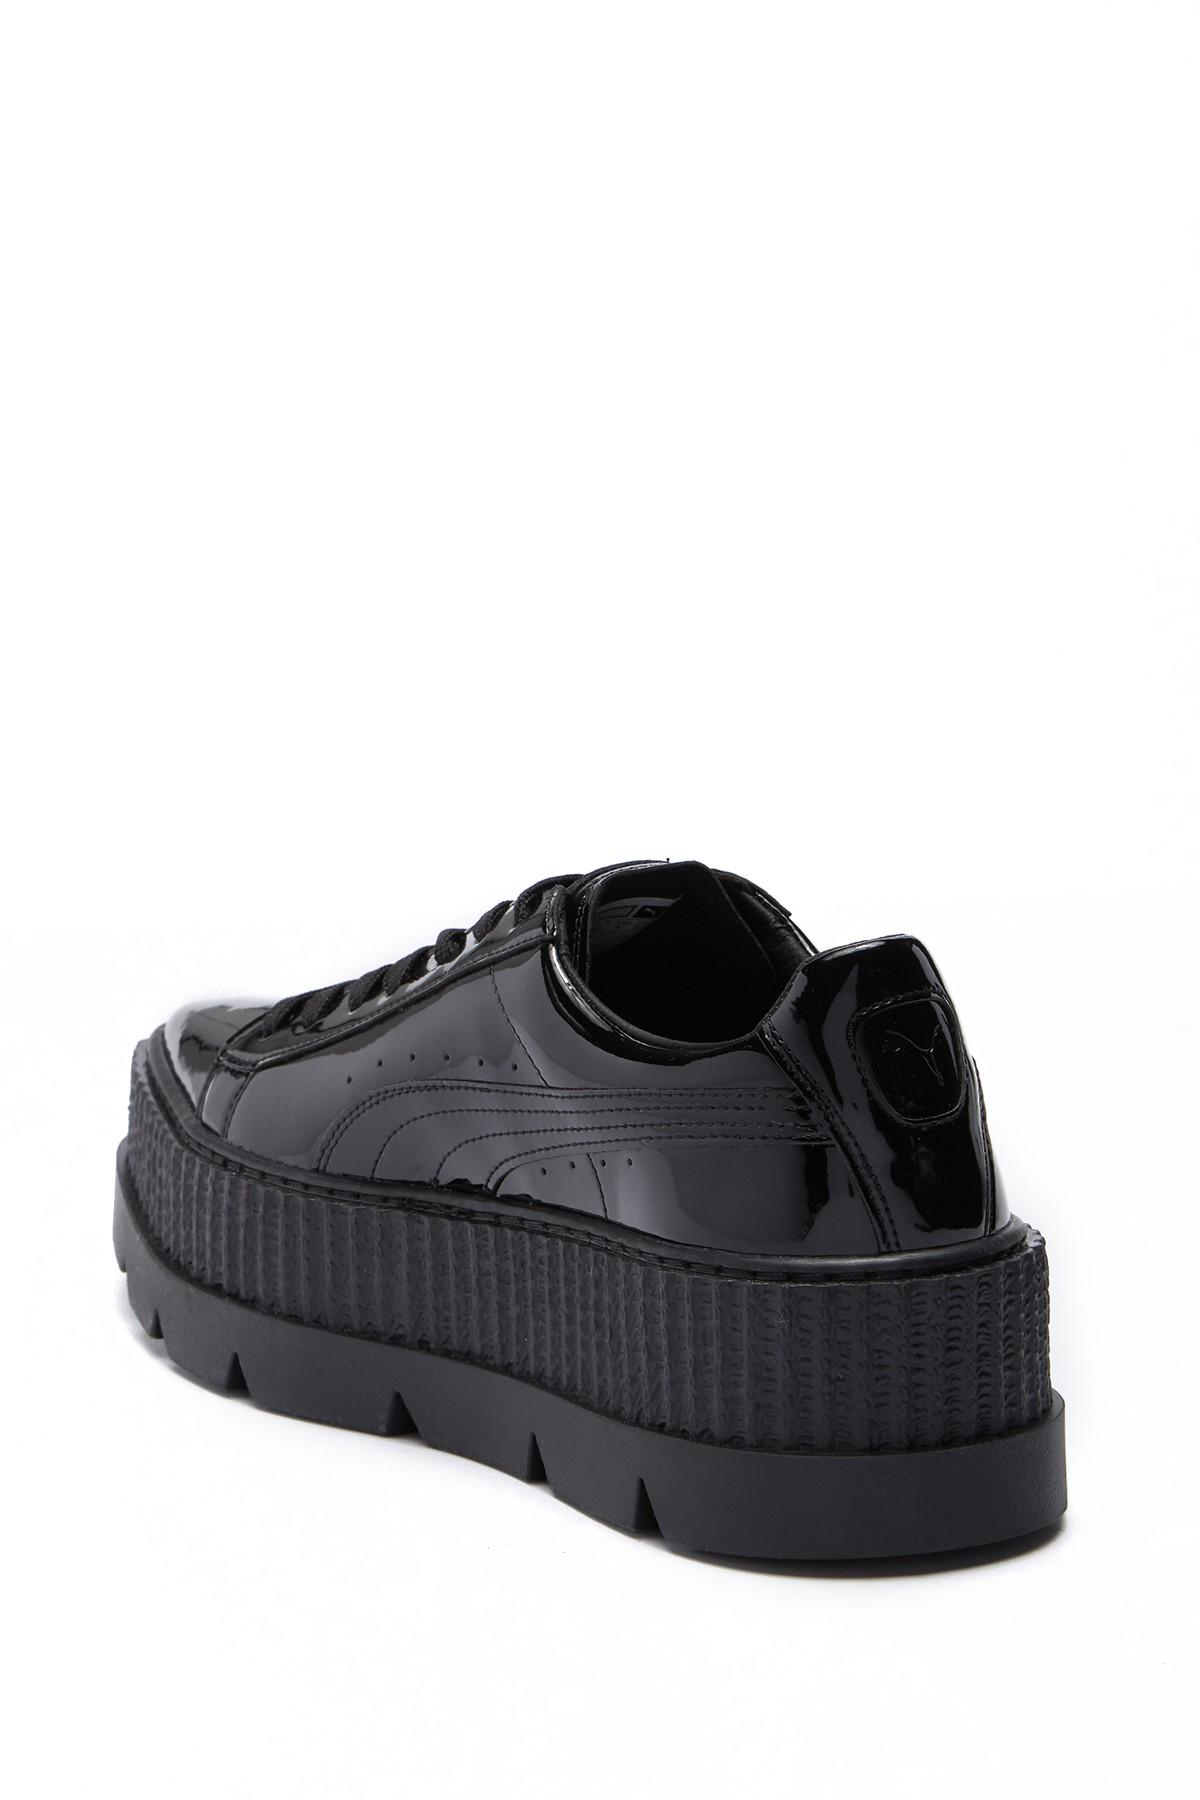 PUMA Fenty By Rihanna Pointed Toe Creeper Patent Platform Sneaker in Black  | Lyst